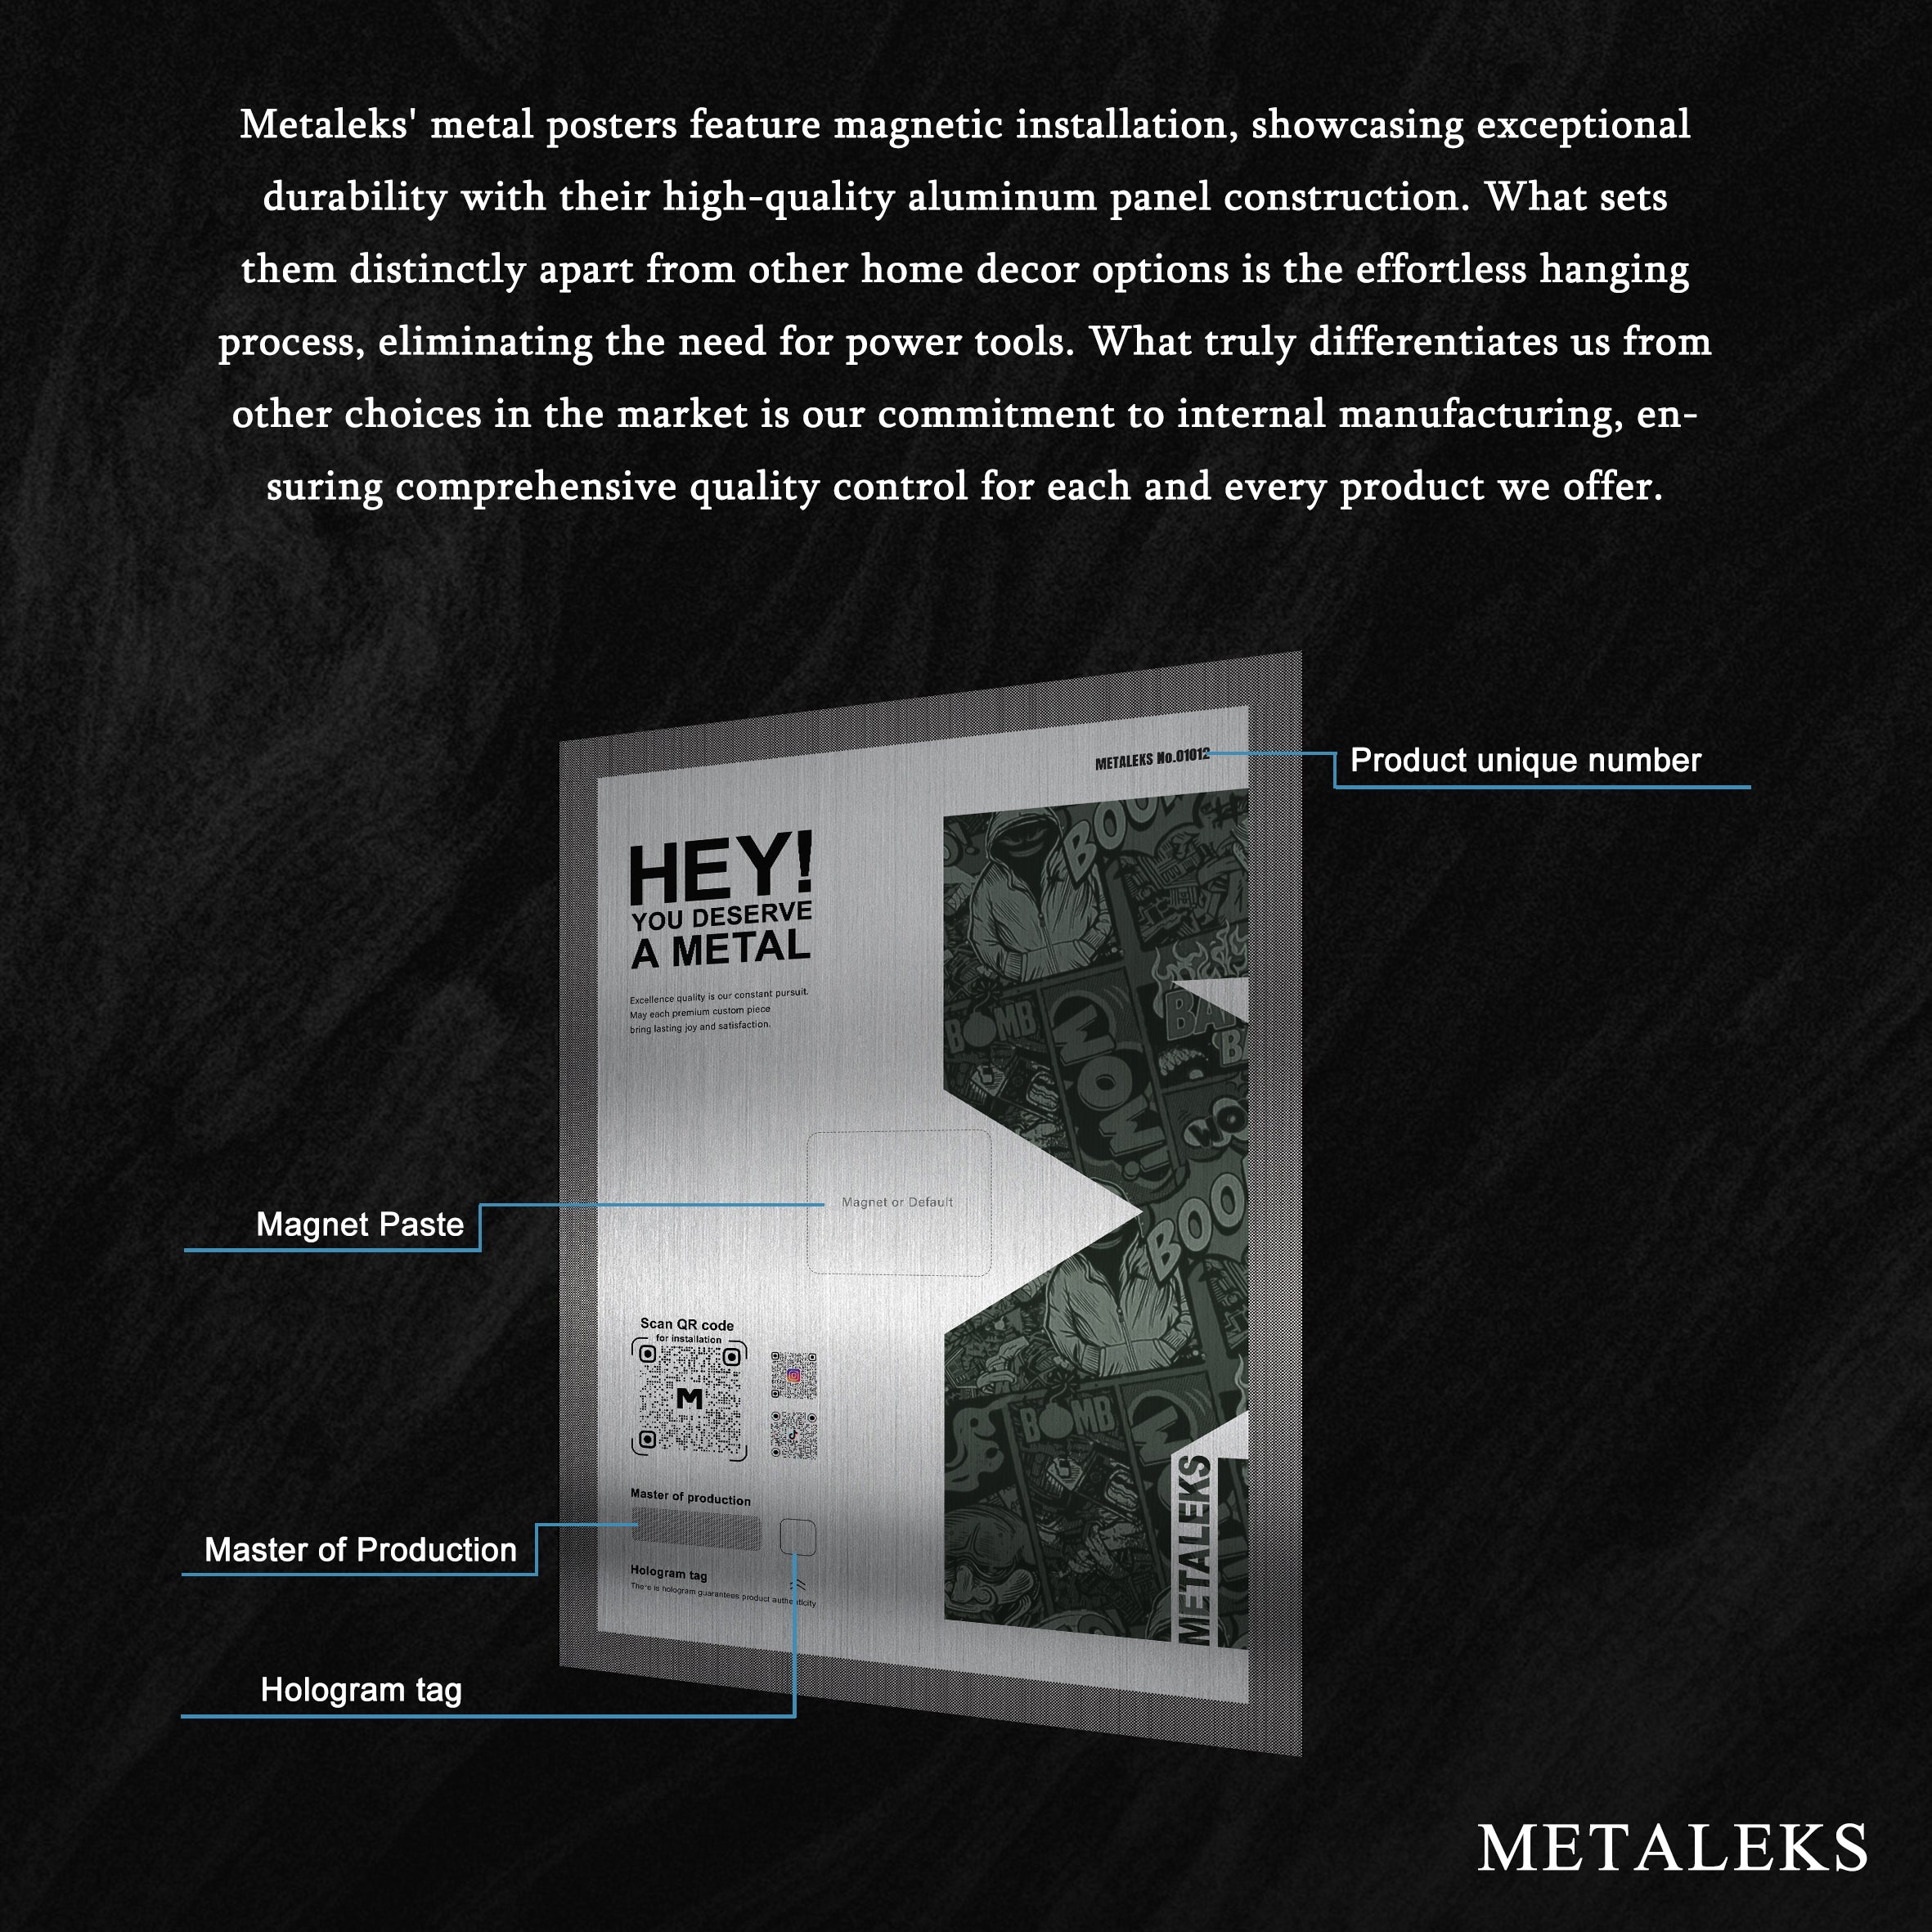 Hellboy -designed by @RITVIK TAKKAR